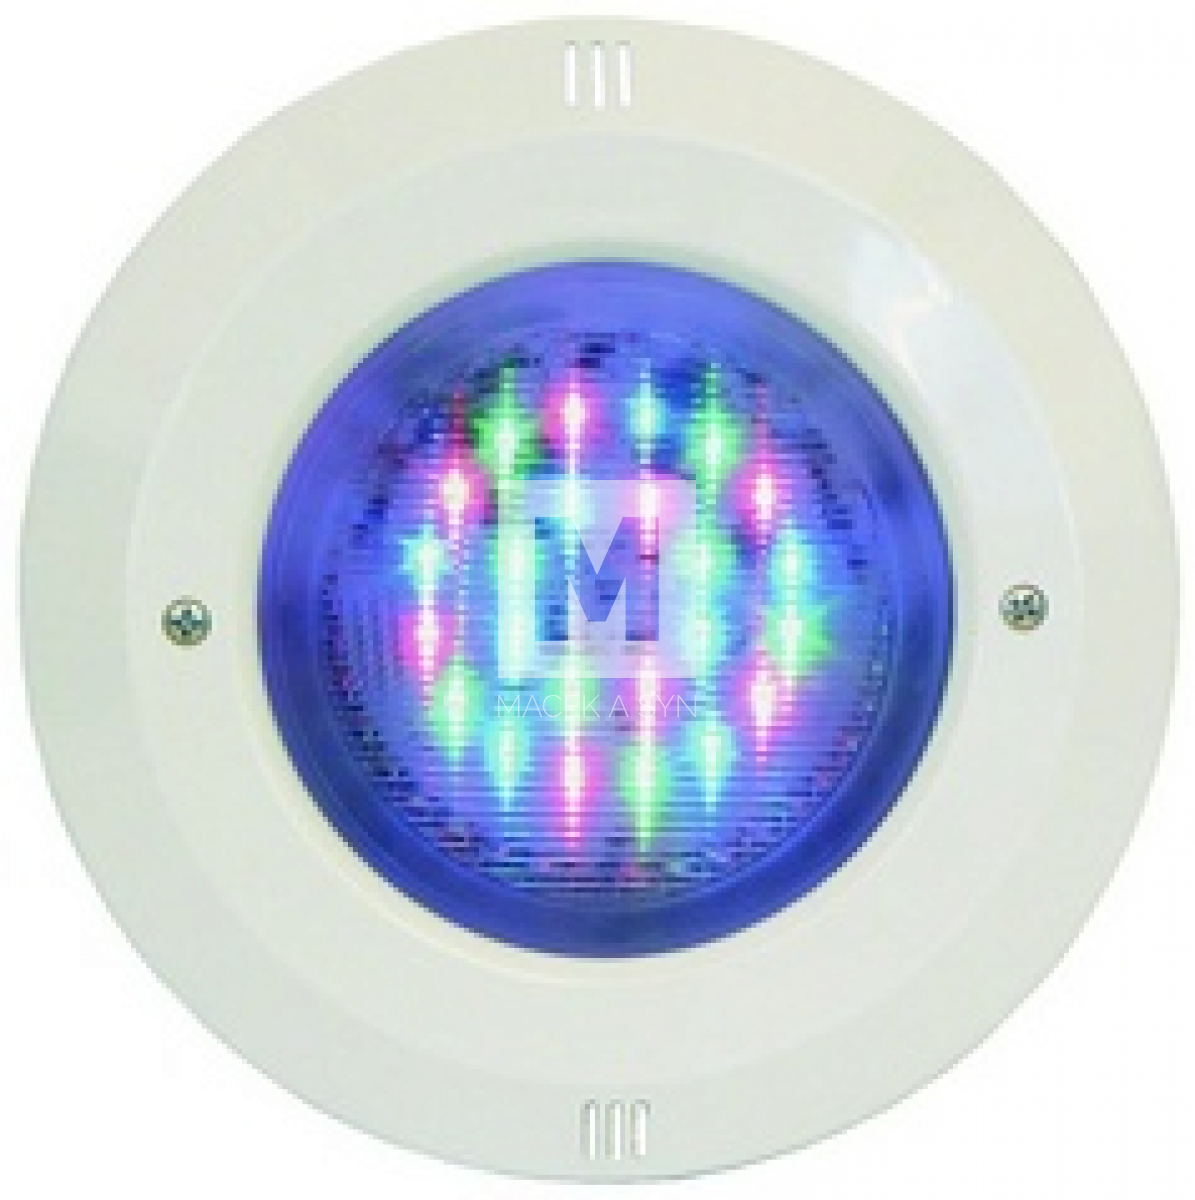 LED-Ersatzlampe PAR56 multicolor, Einbauteile, Beleuchtung, LED  Scheinwerfer